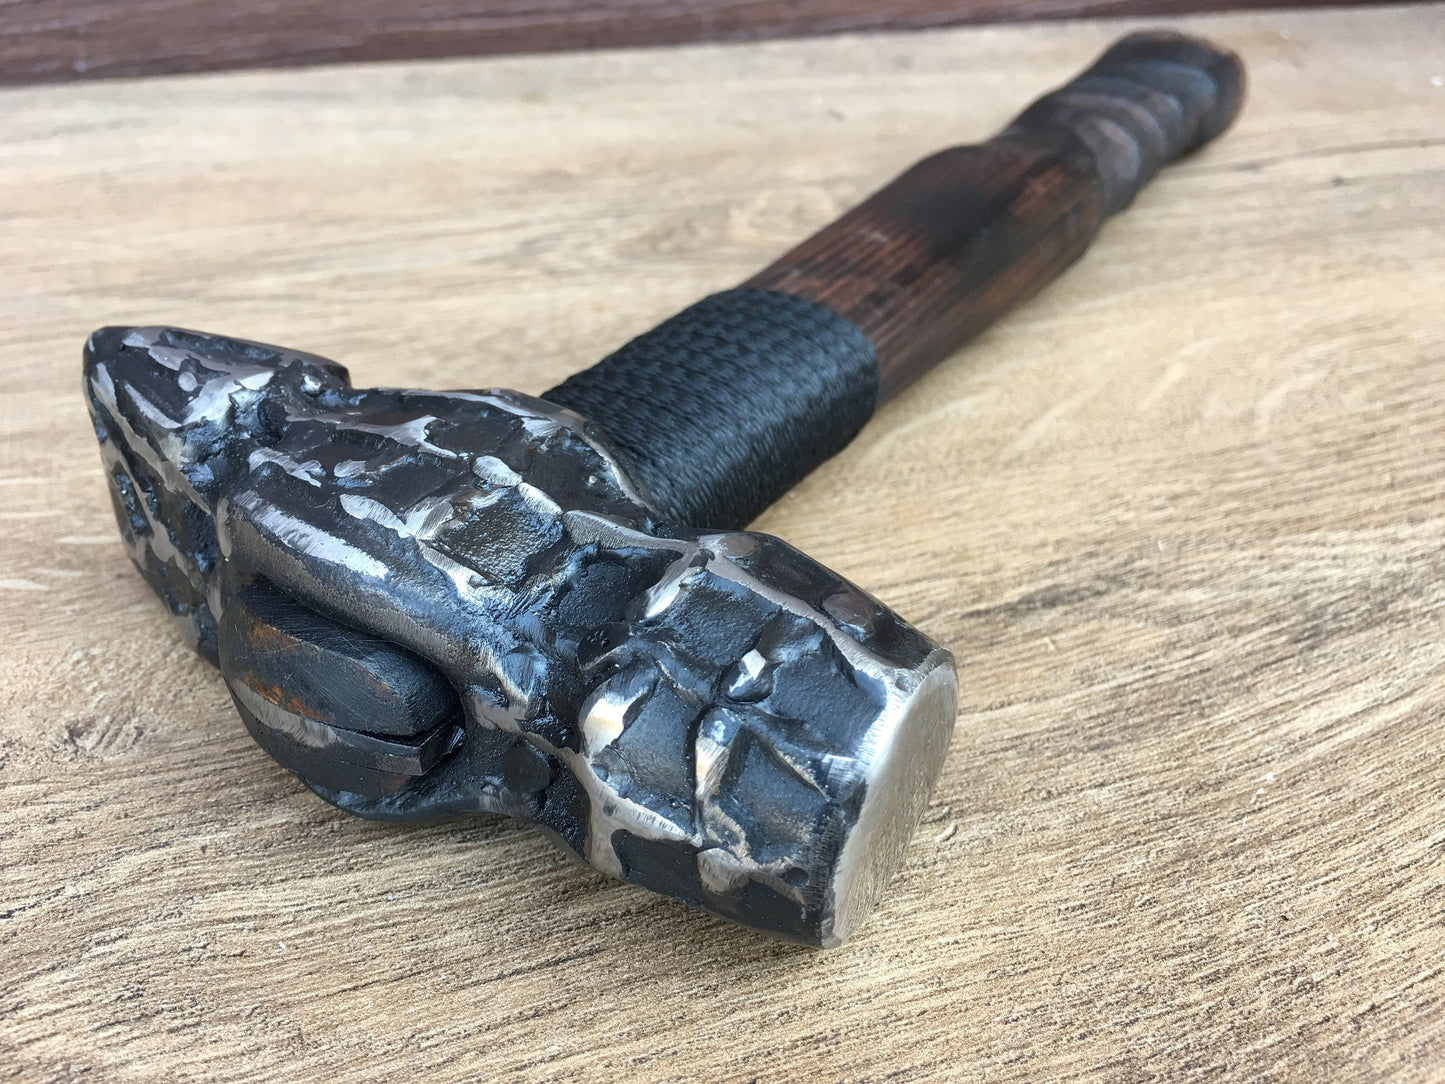 Hand forged hammer, handyman tool, viking axe,his birthday gift, mens gift, iron gift for him, Thors hammer, steel hammer, blacksmith hammer